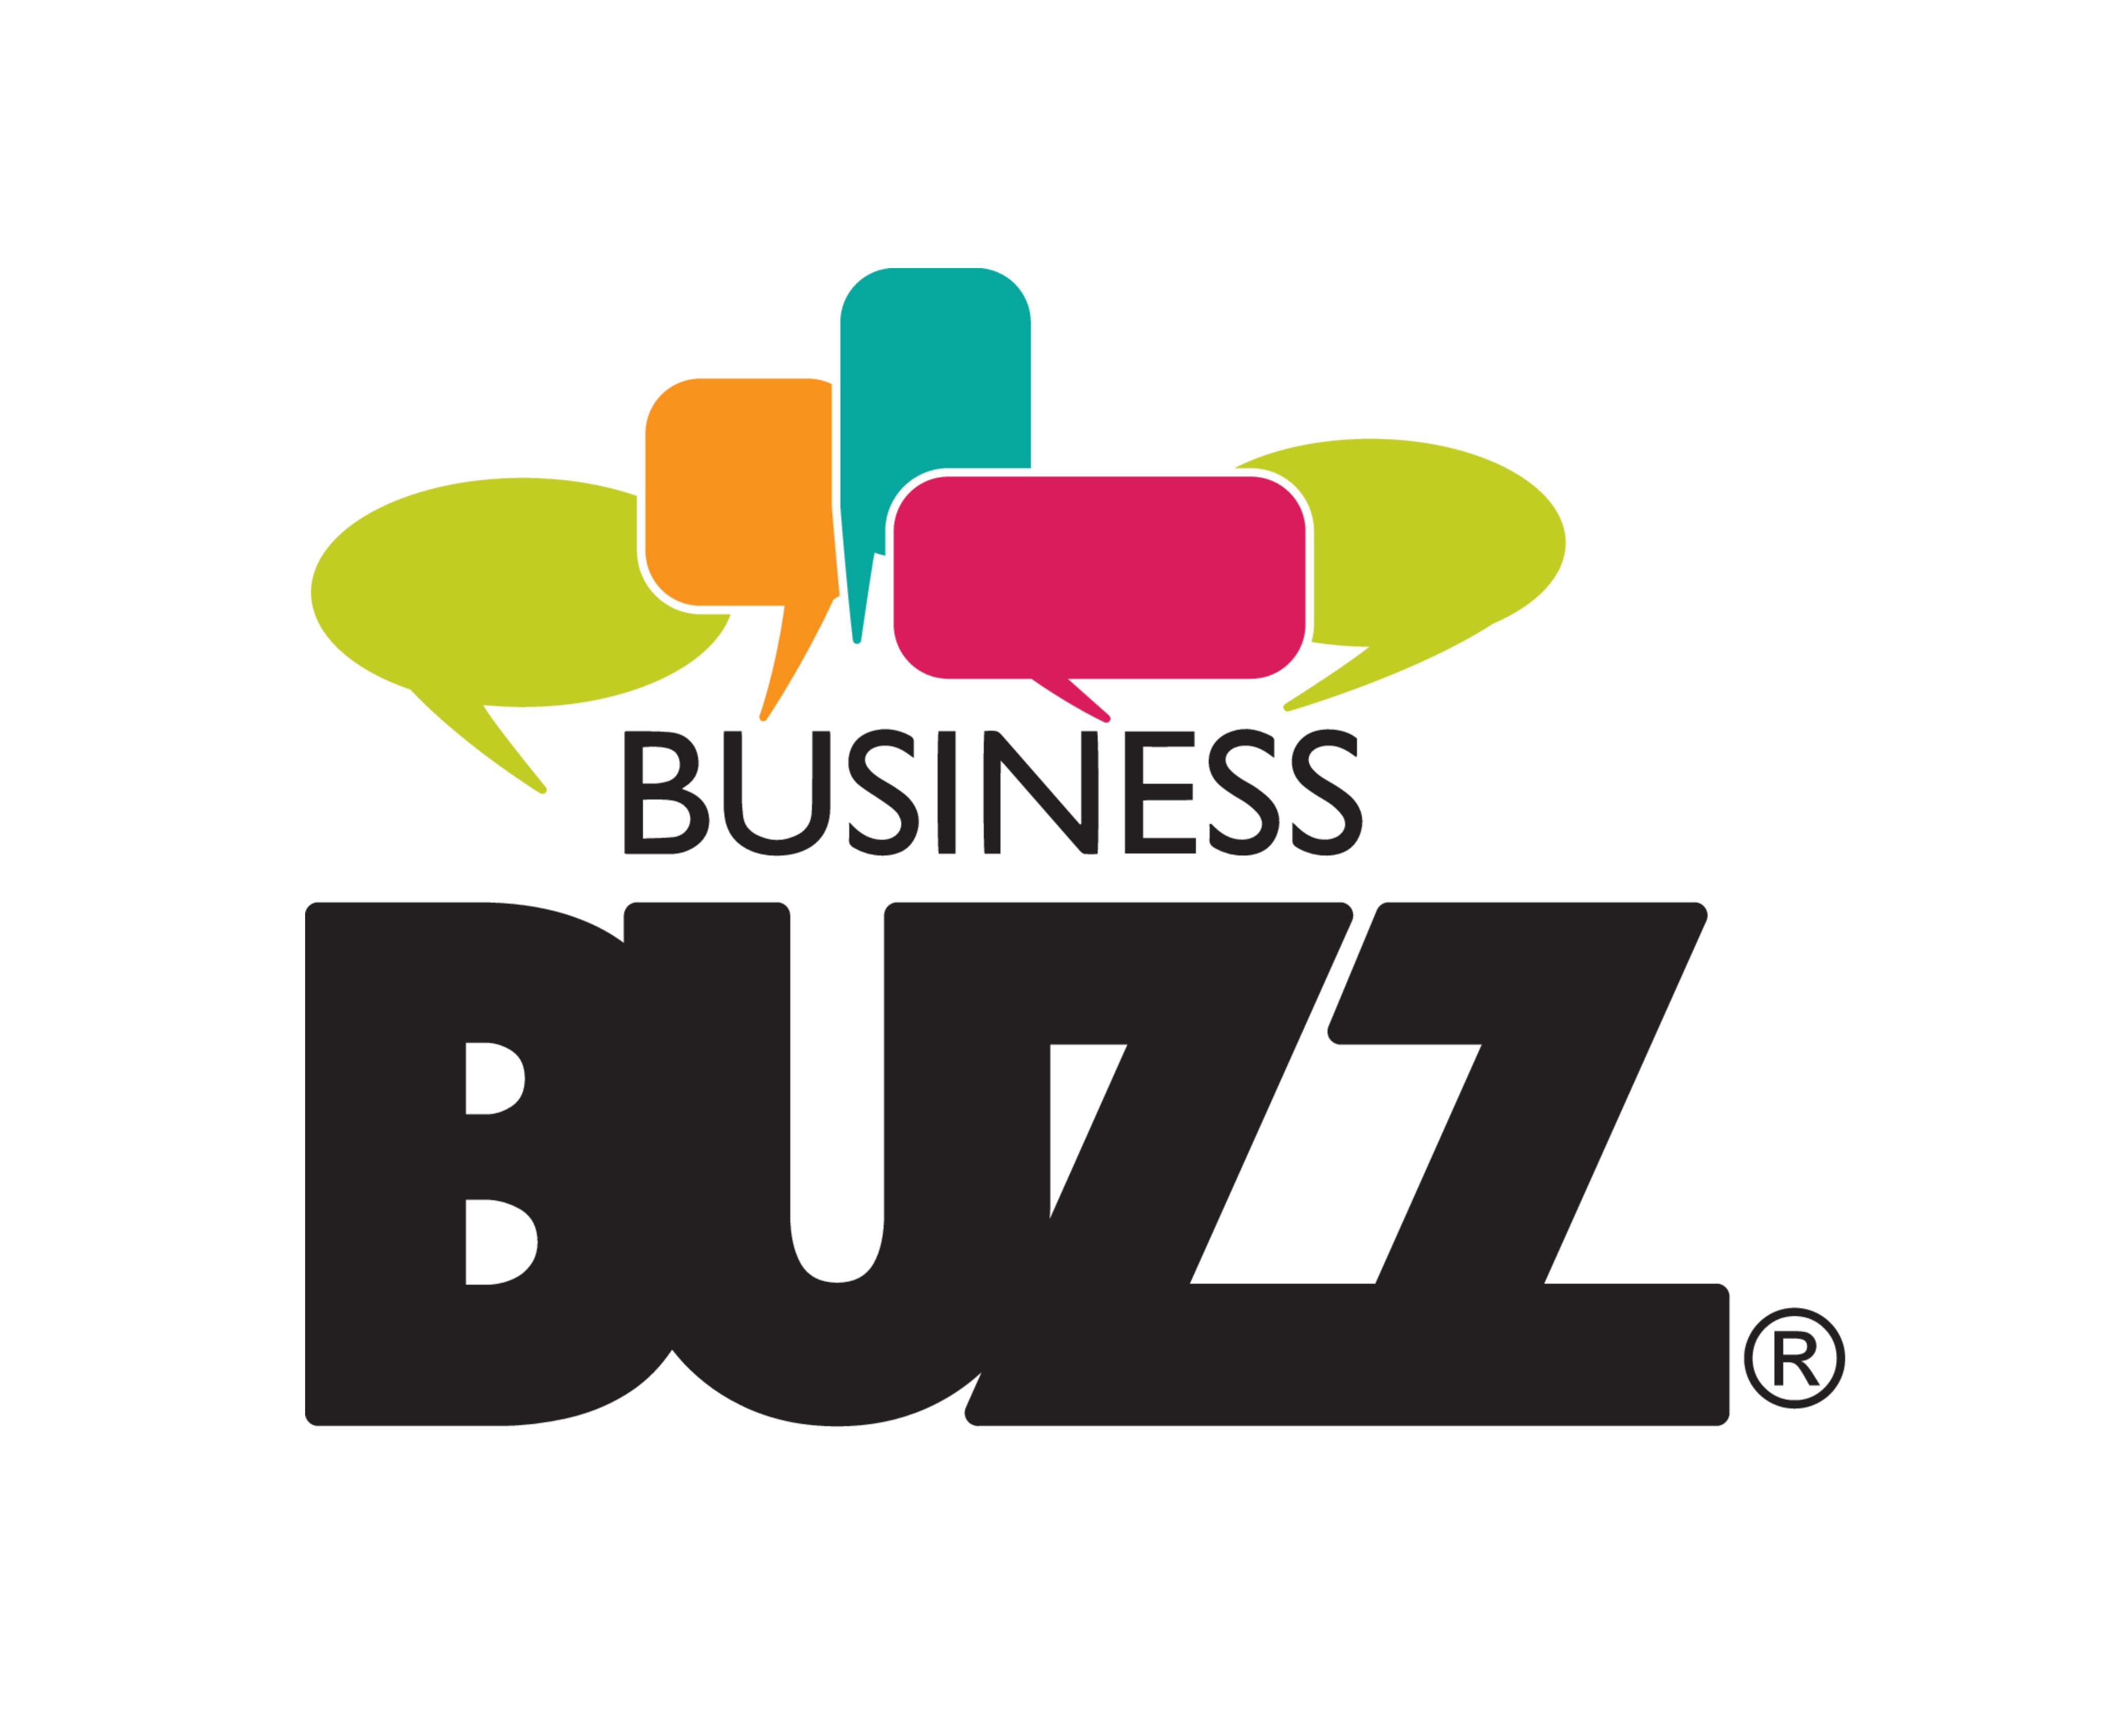 Business Buzz